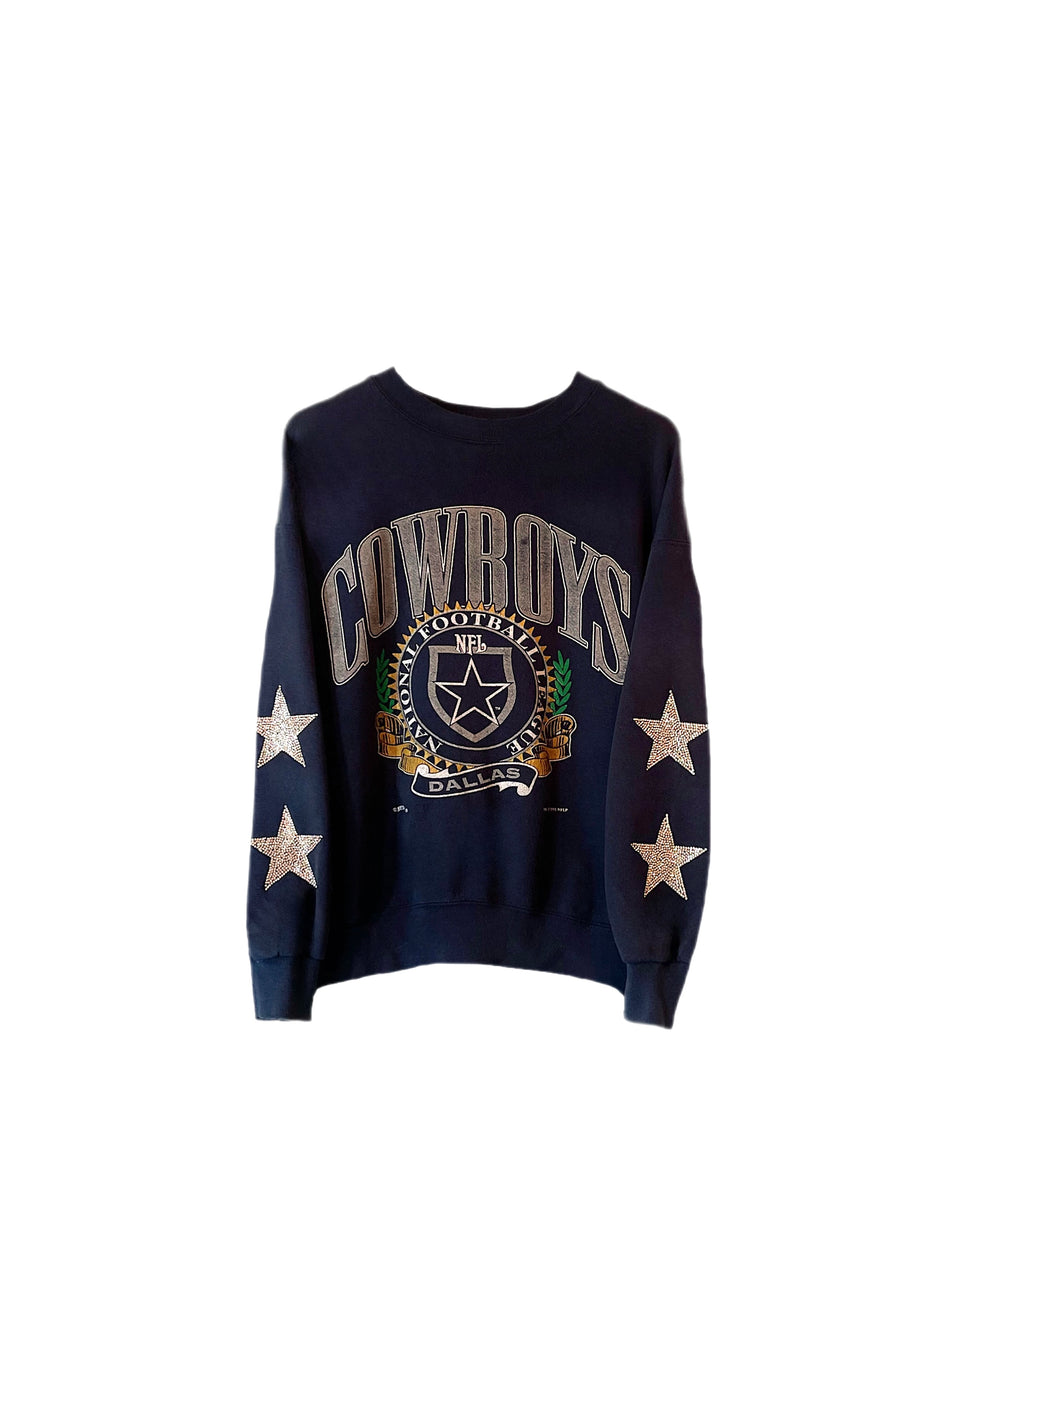 Dallas Cowboys, NFL One of a KIND Vintage Sweatshirt with Crystal Star Design.